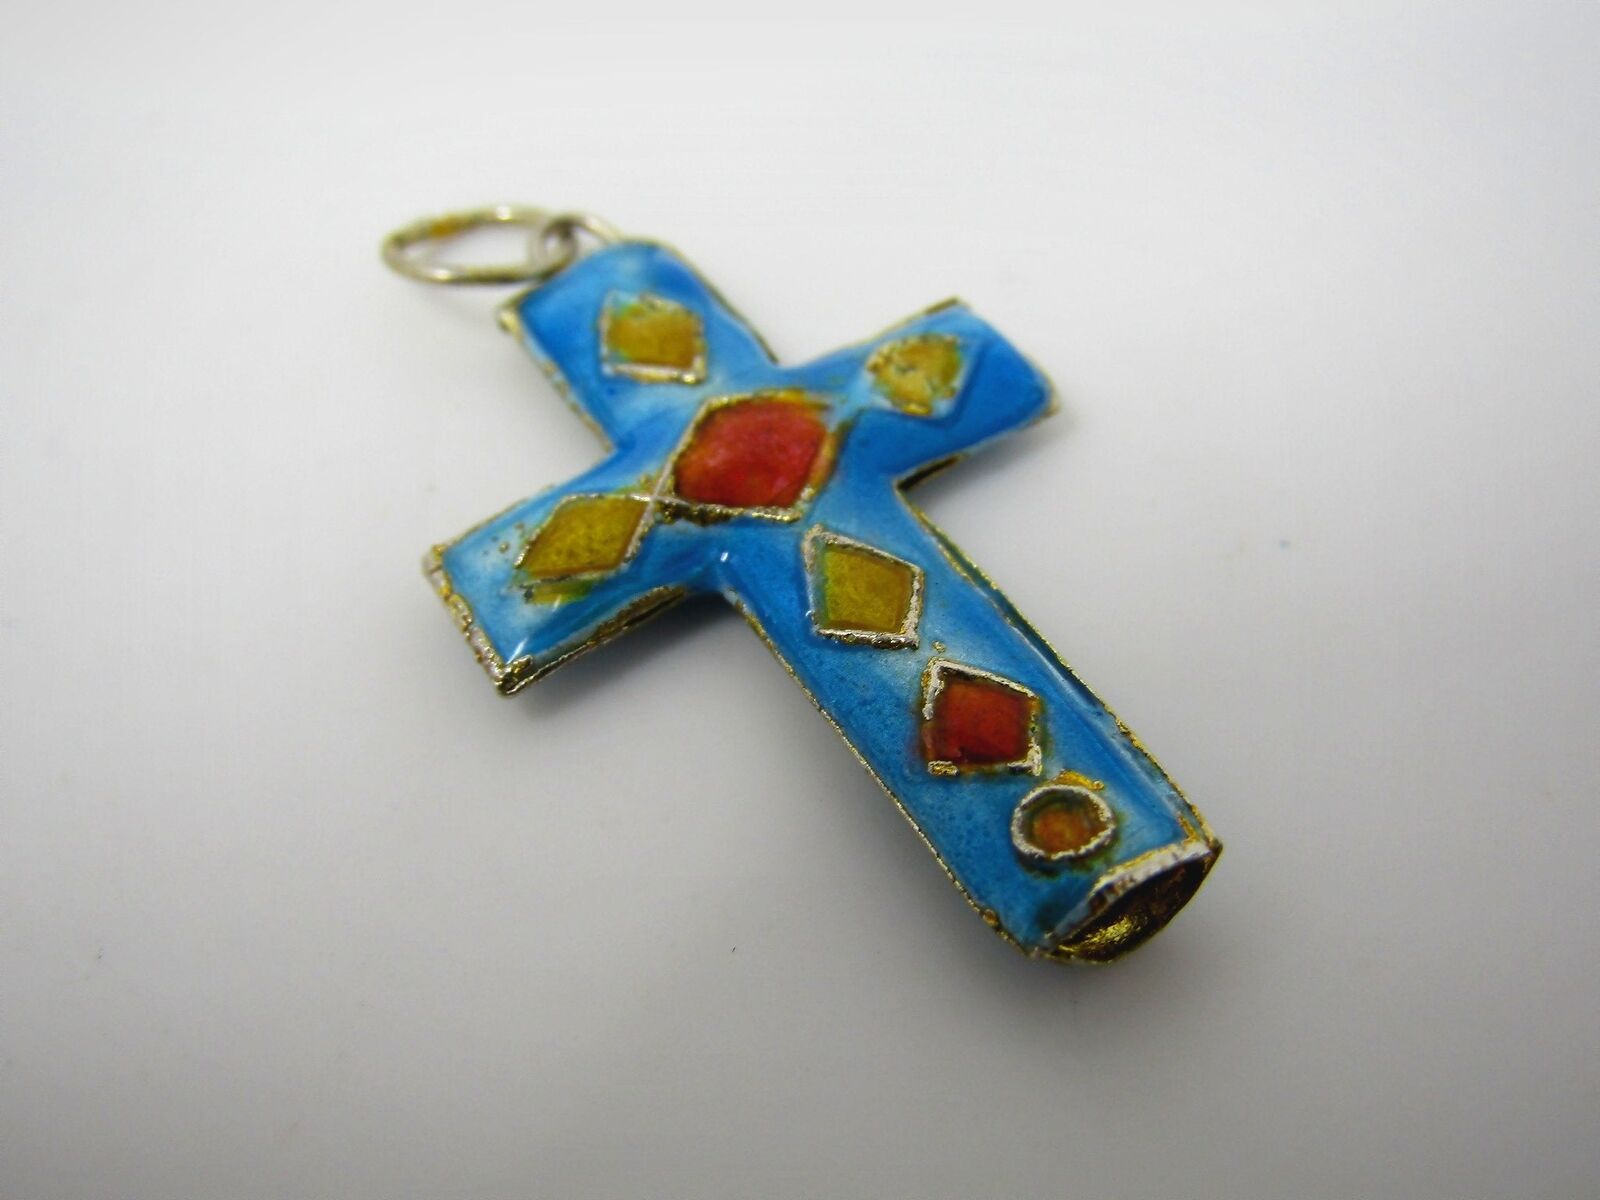 Vintage Christian Cross Necklace Pendant: Blue & Orange Enamel